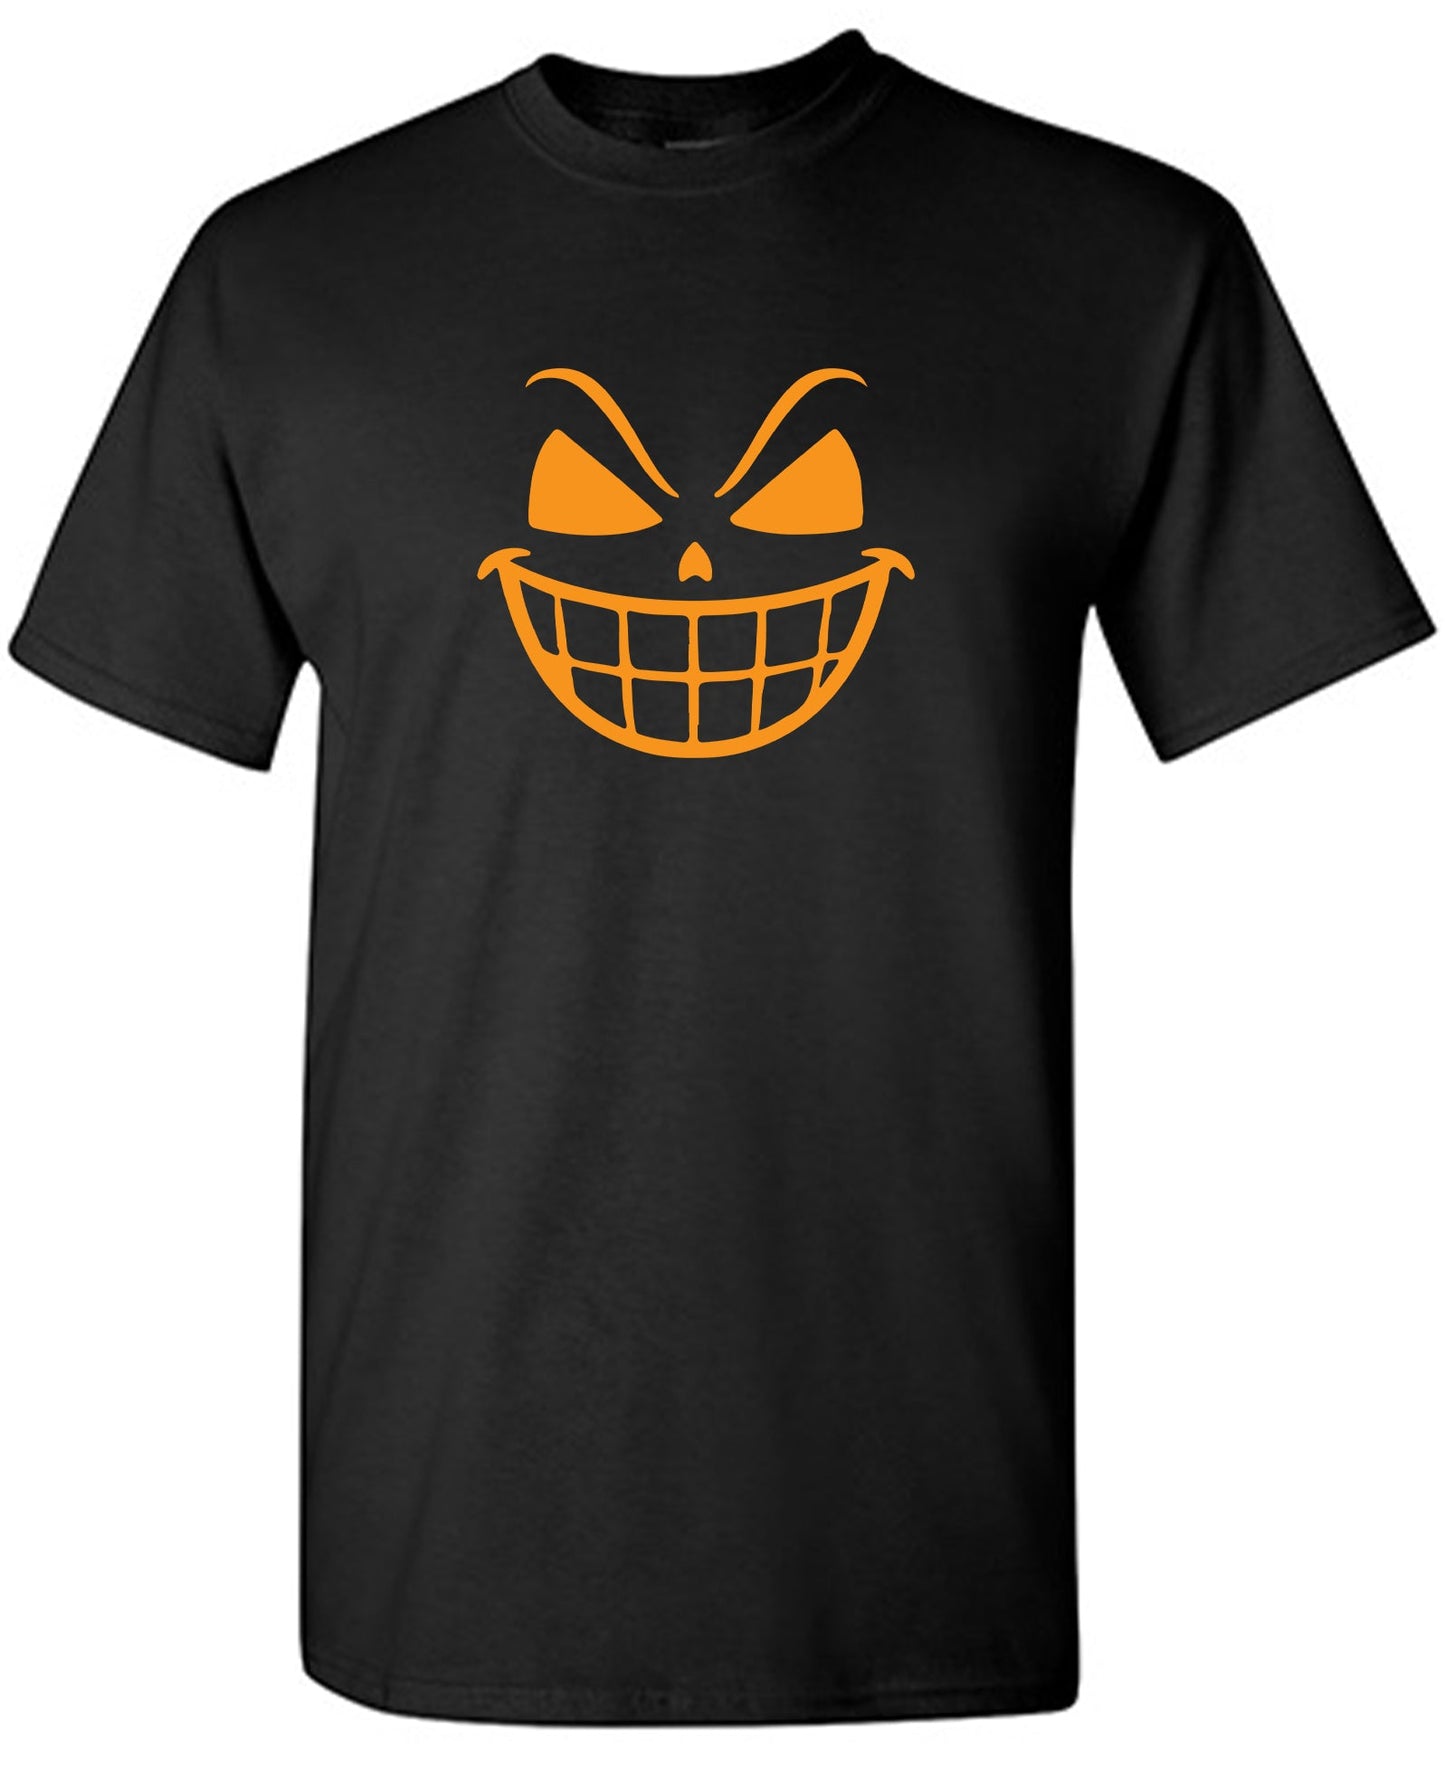 Pumpkin Teeth Shirt - Funny Graphic T Shirts